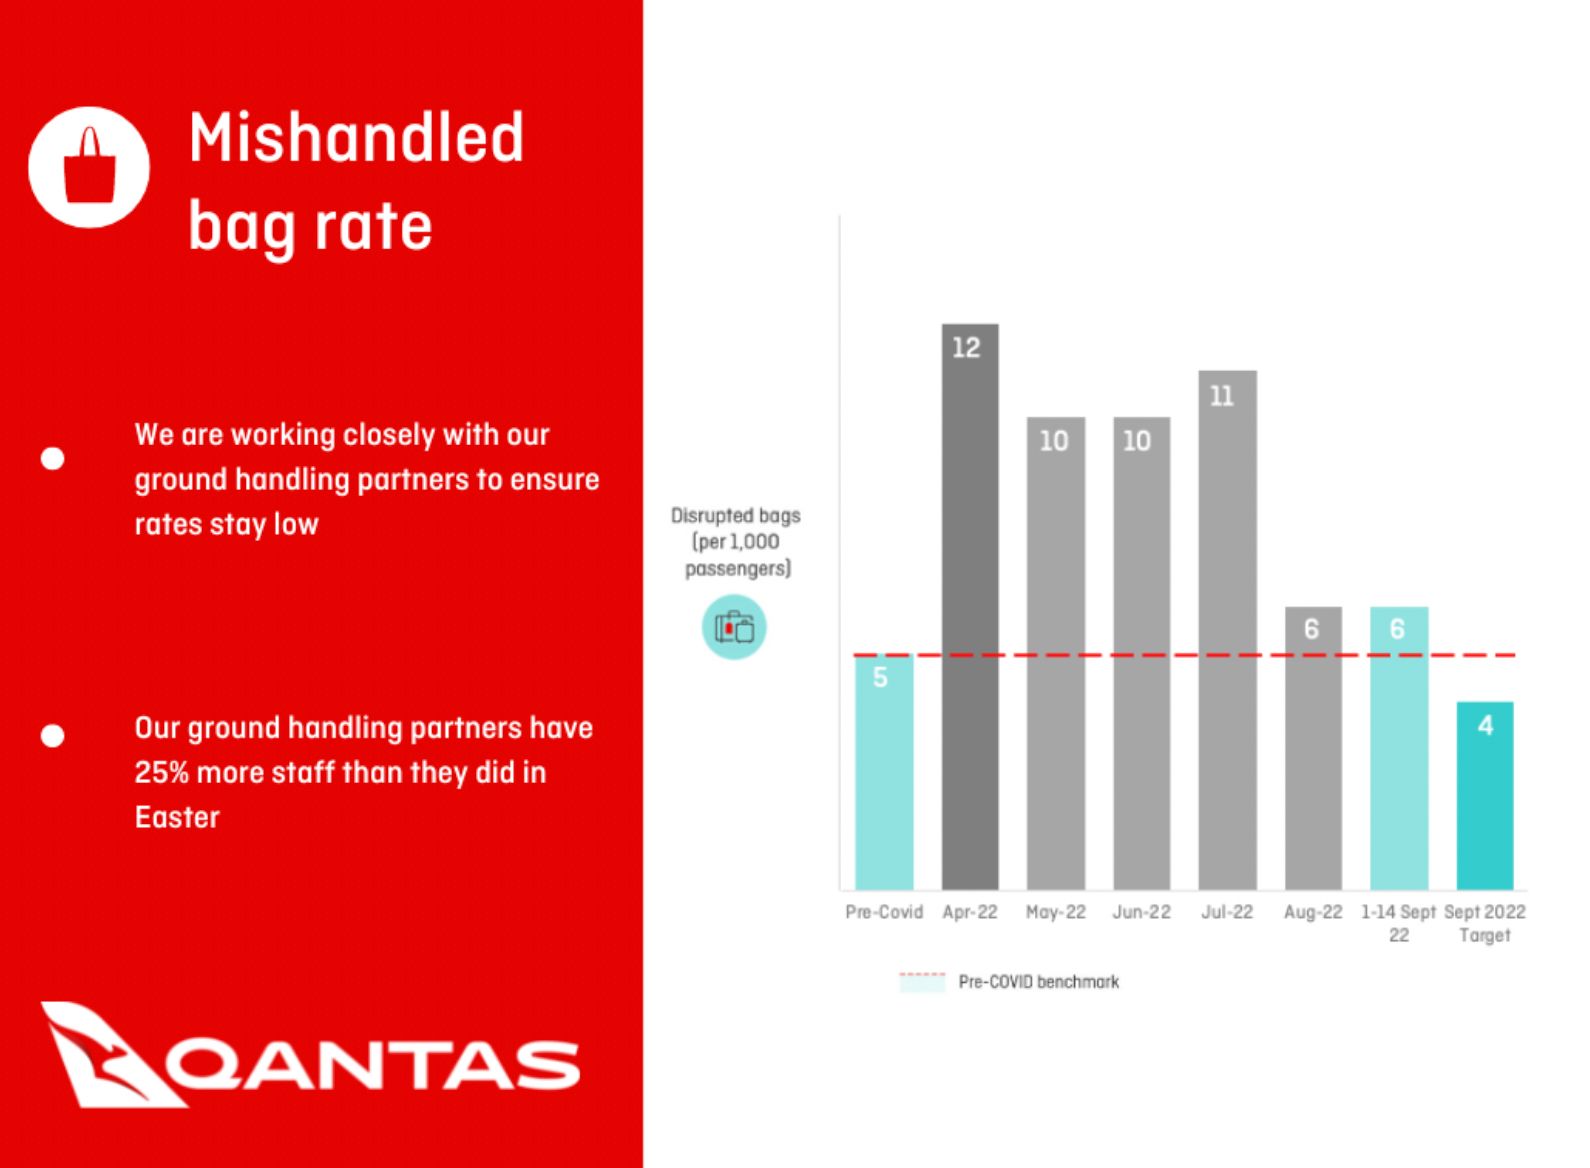 Qantas Mishandled Bag Rate is at six per 1000 passengers